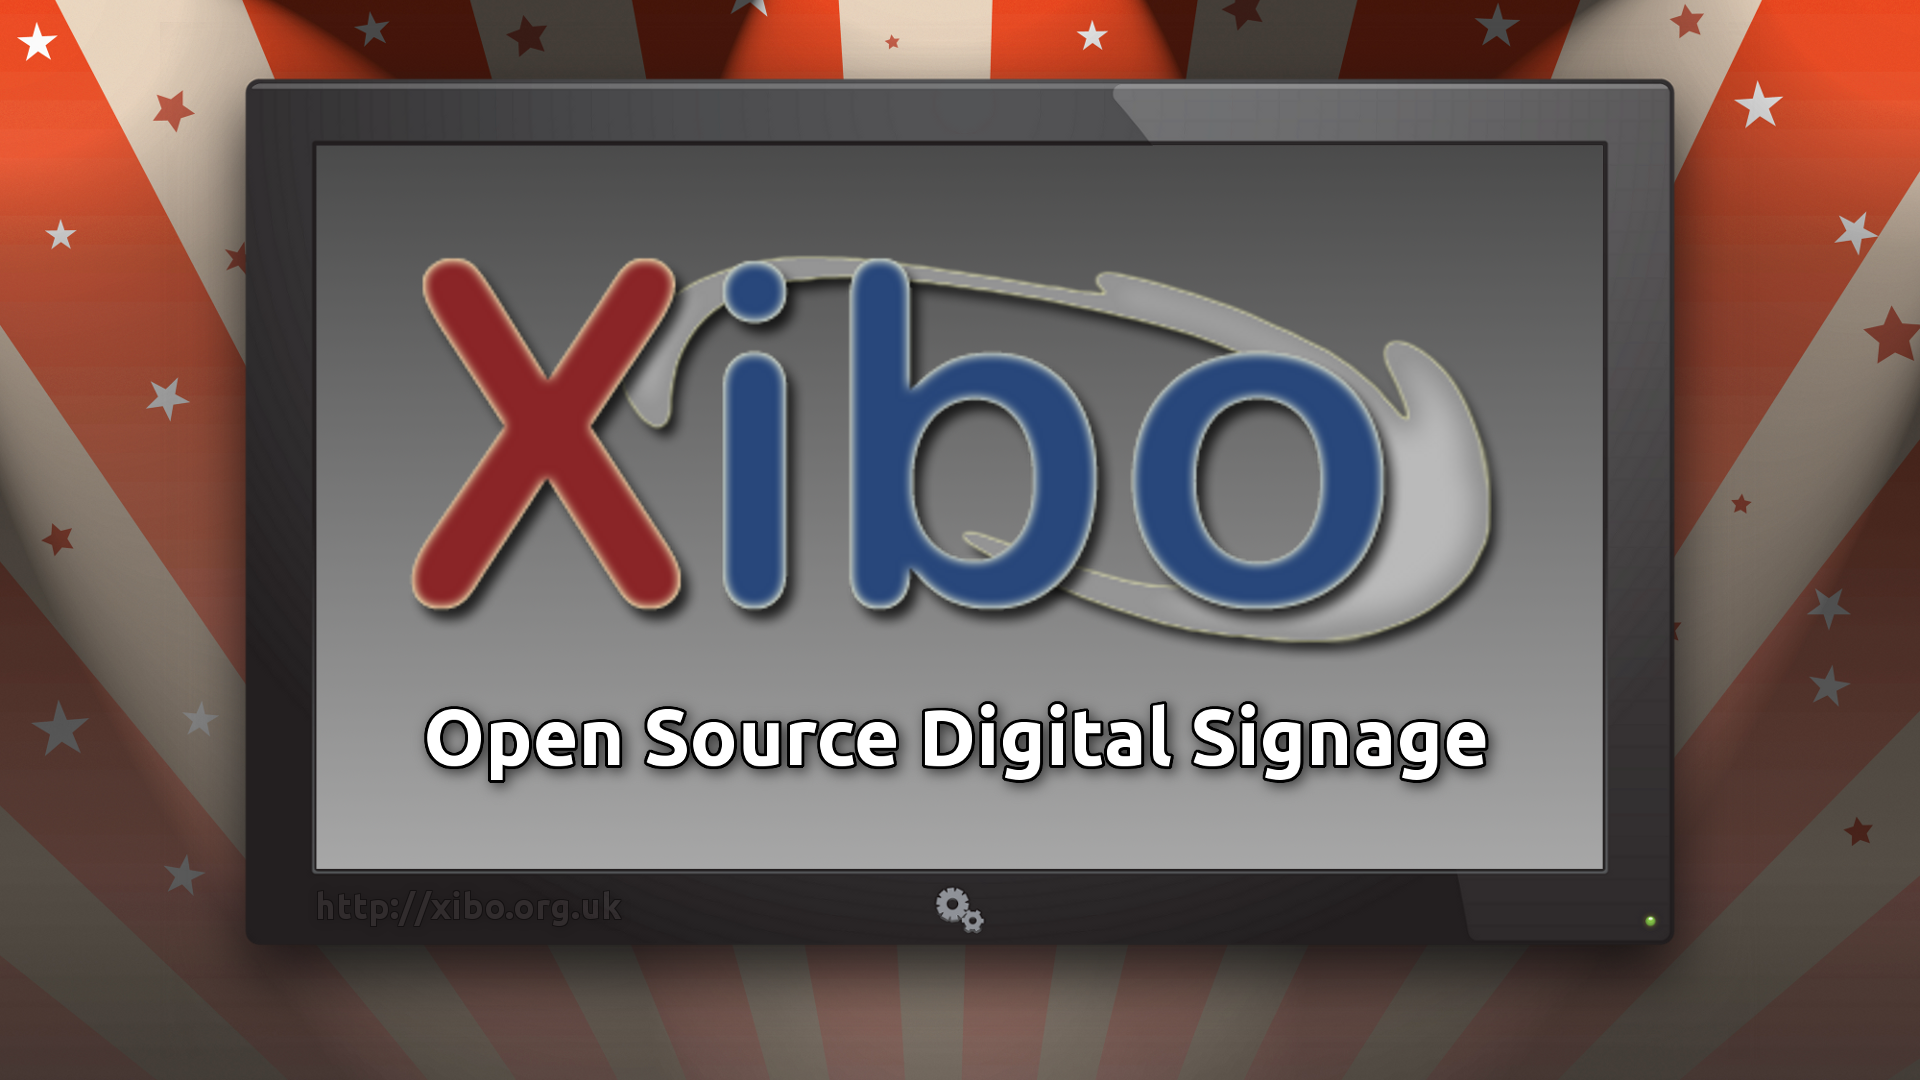 Xibo - Open Source Digital Signage Software